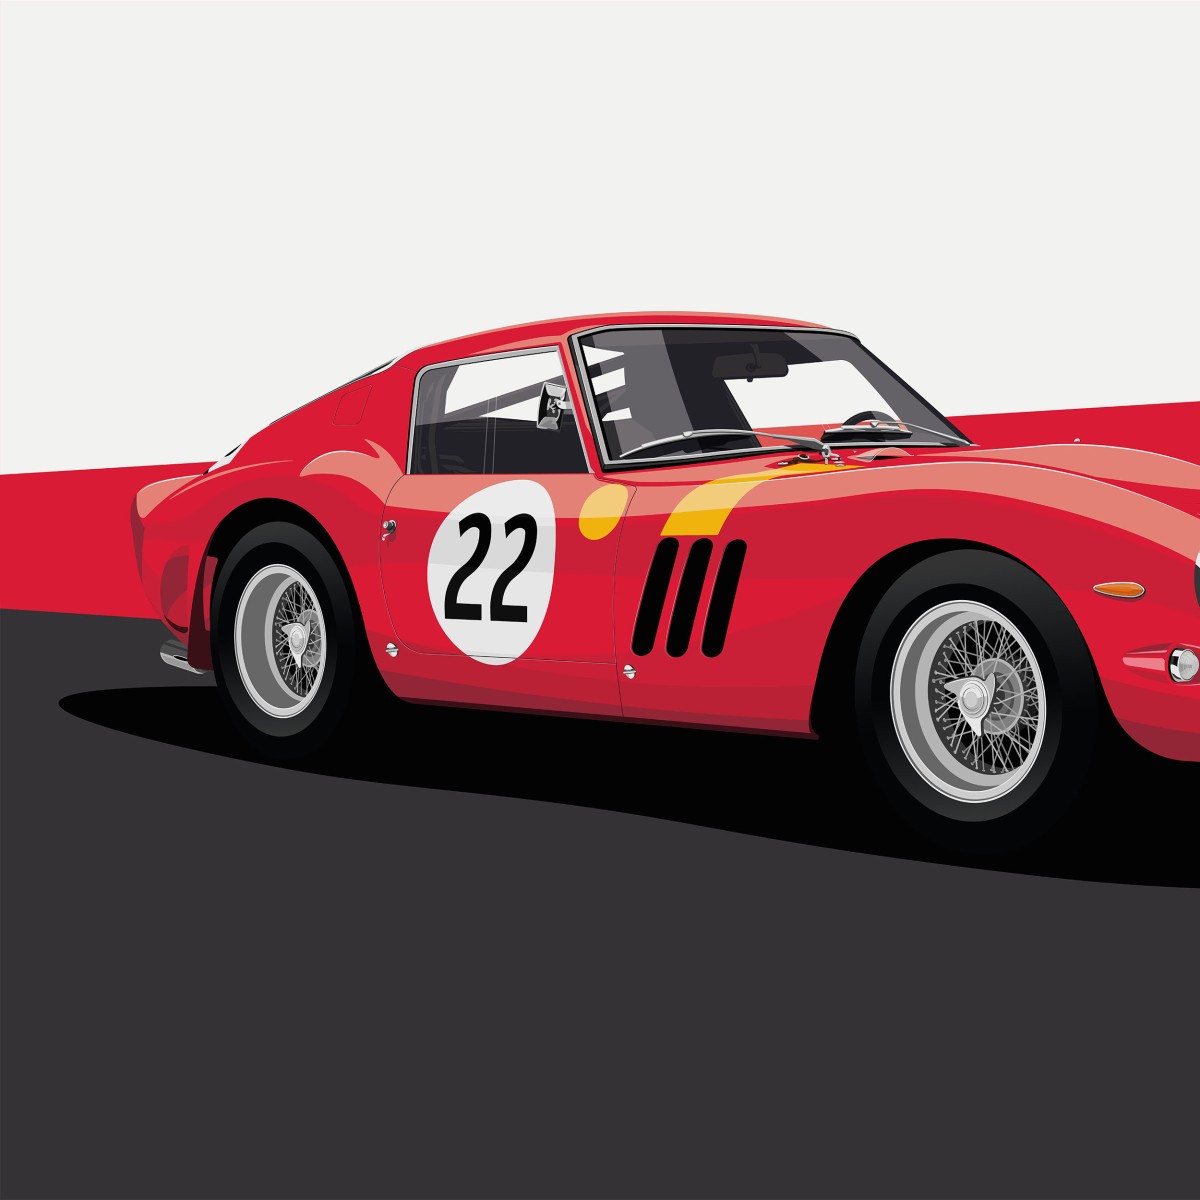 Ferrari 250 GTO - Automotive Prints